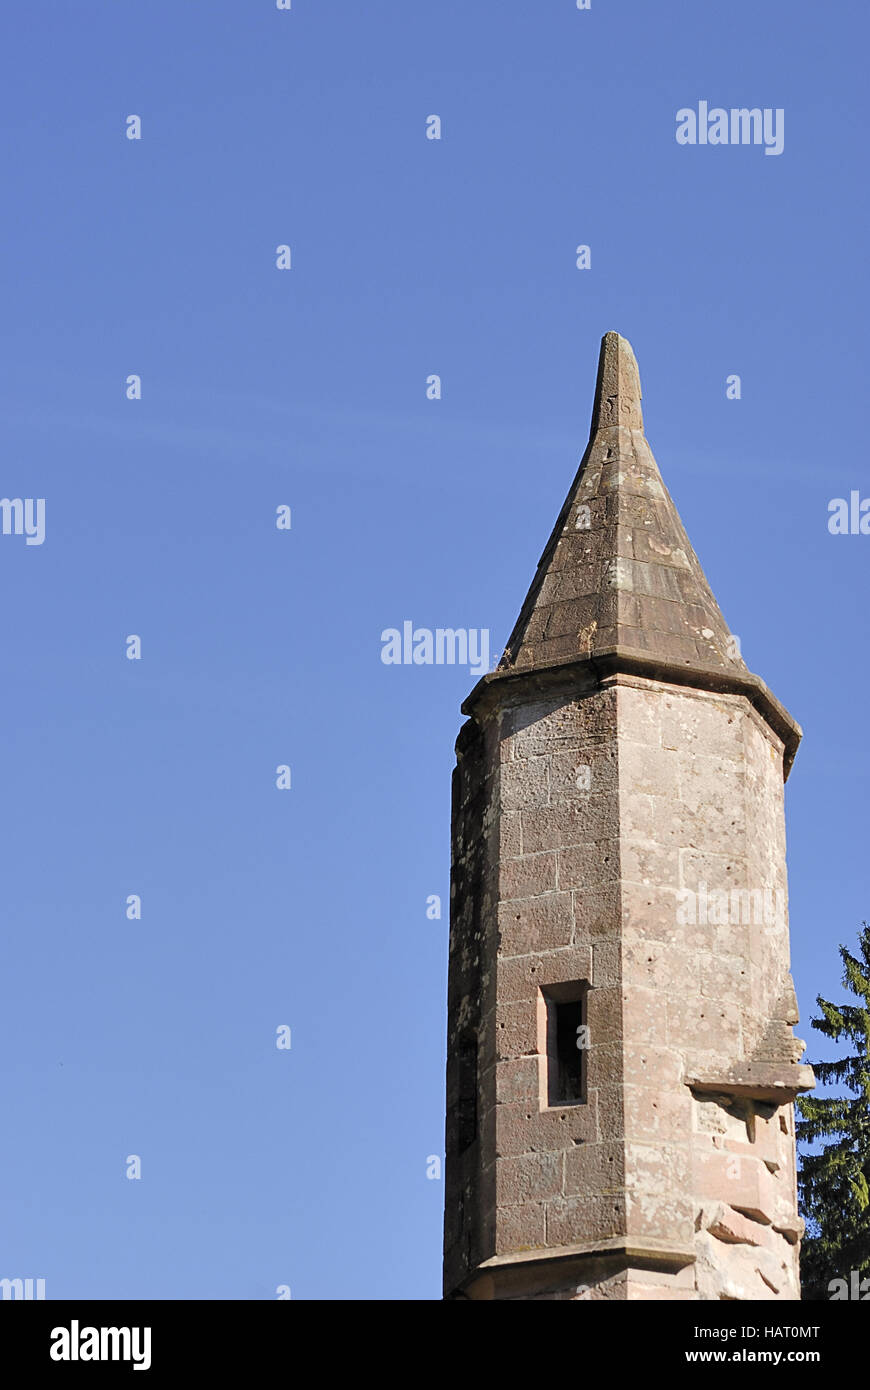 Turmspitze - torre appuntita 2 Foto Stock